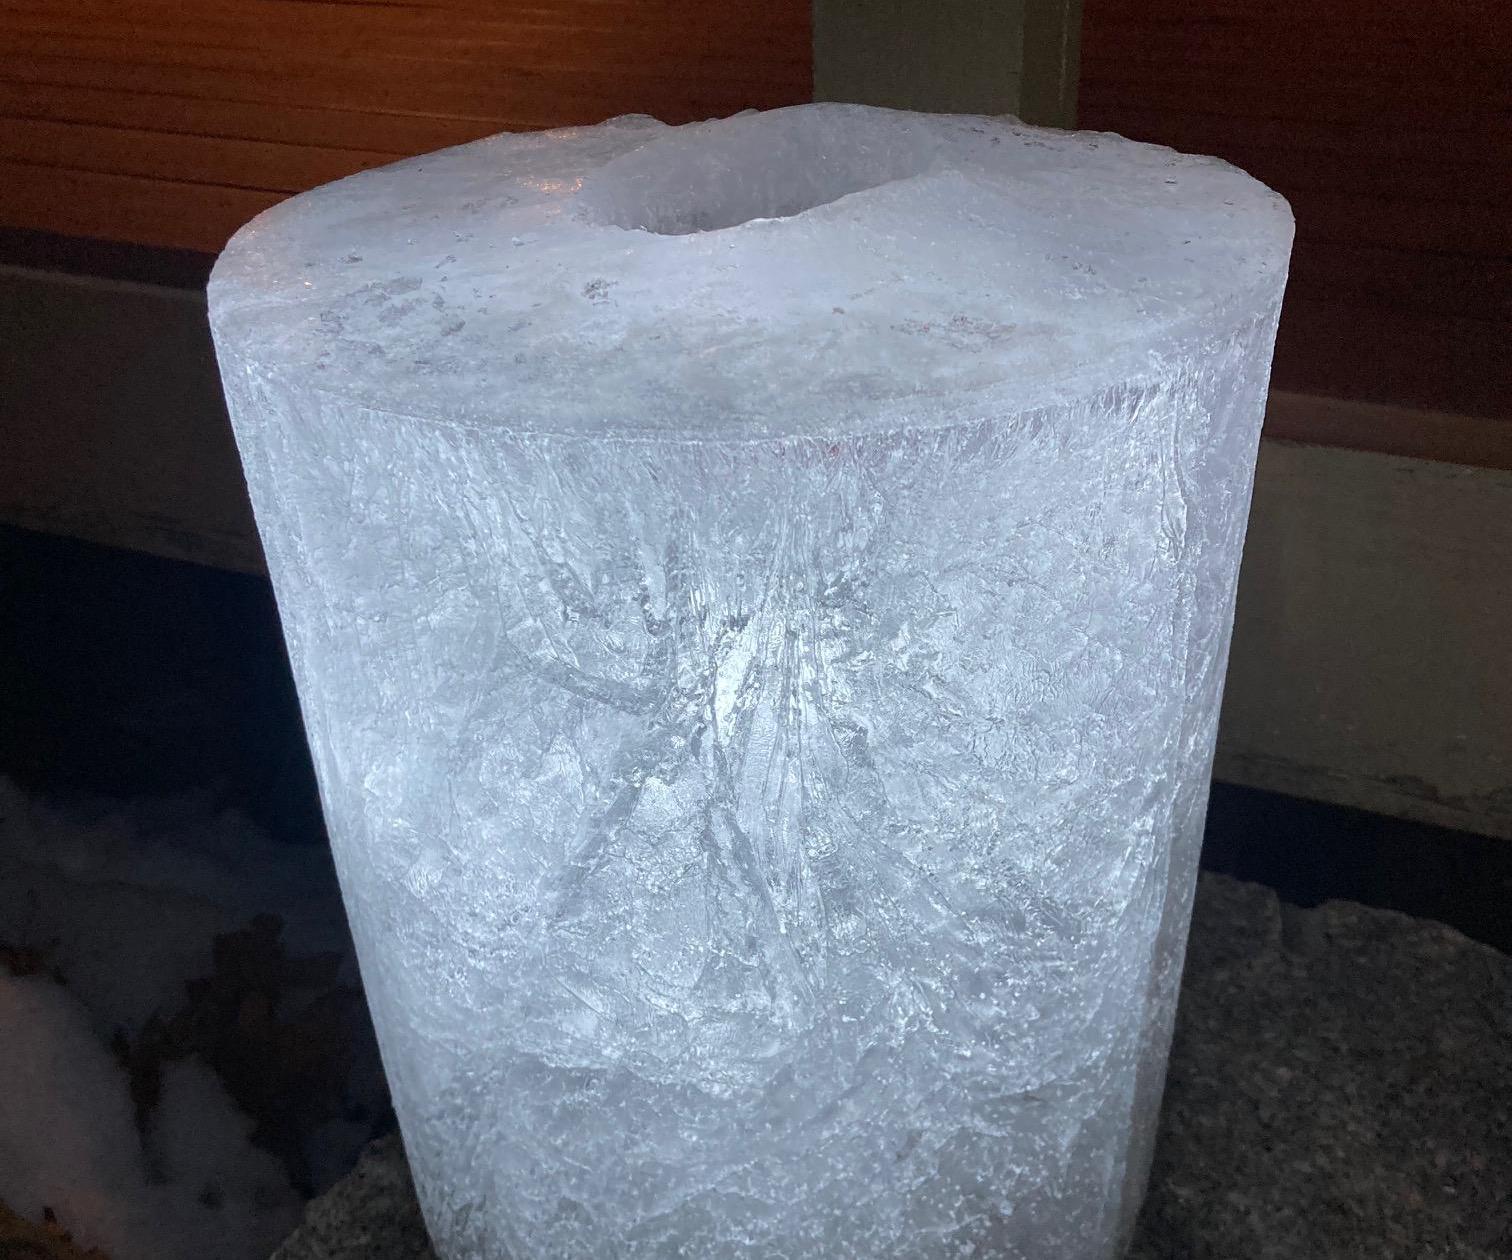 Ice Lanterns